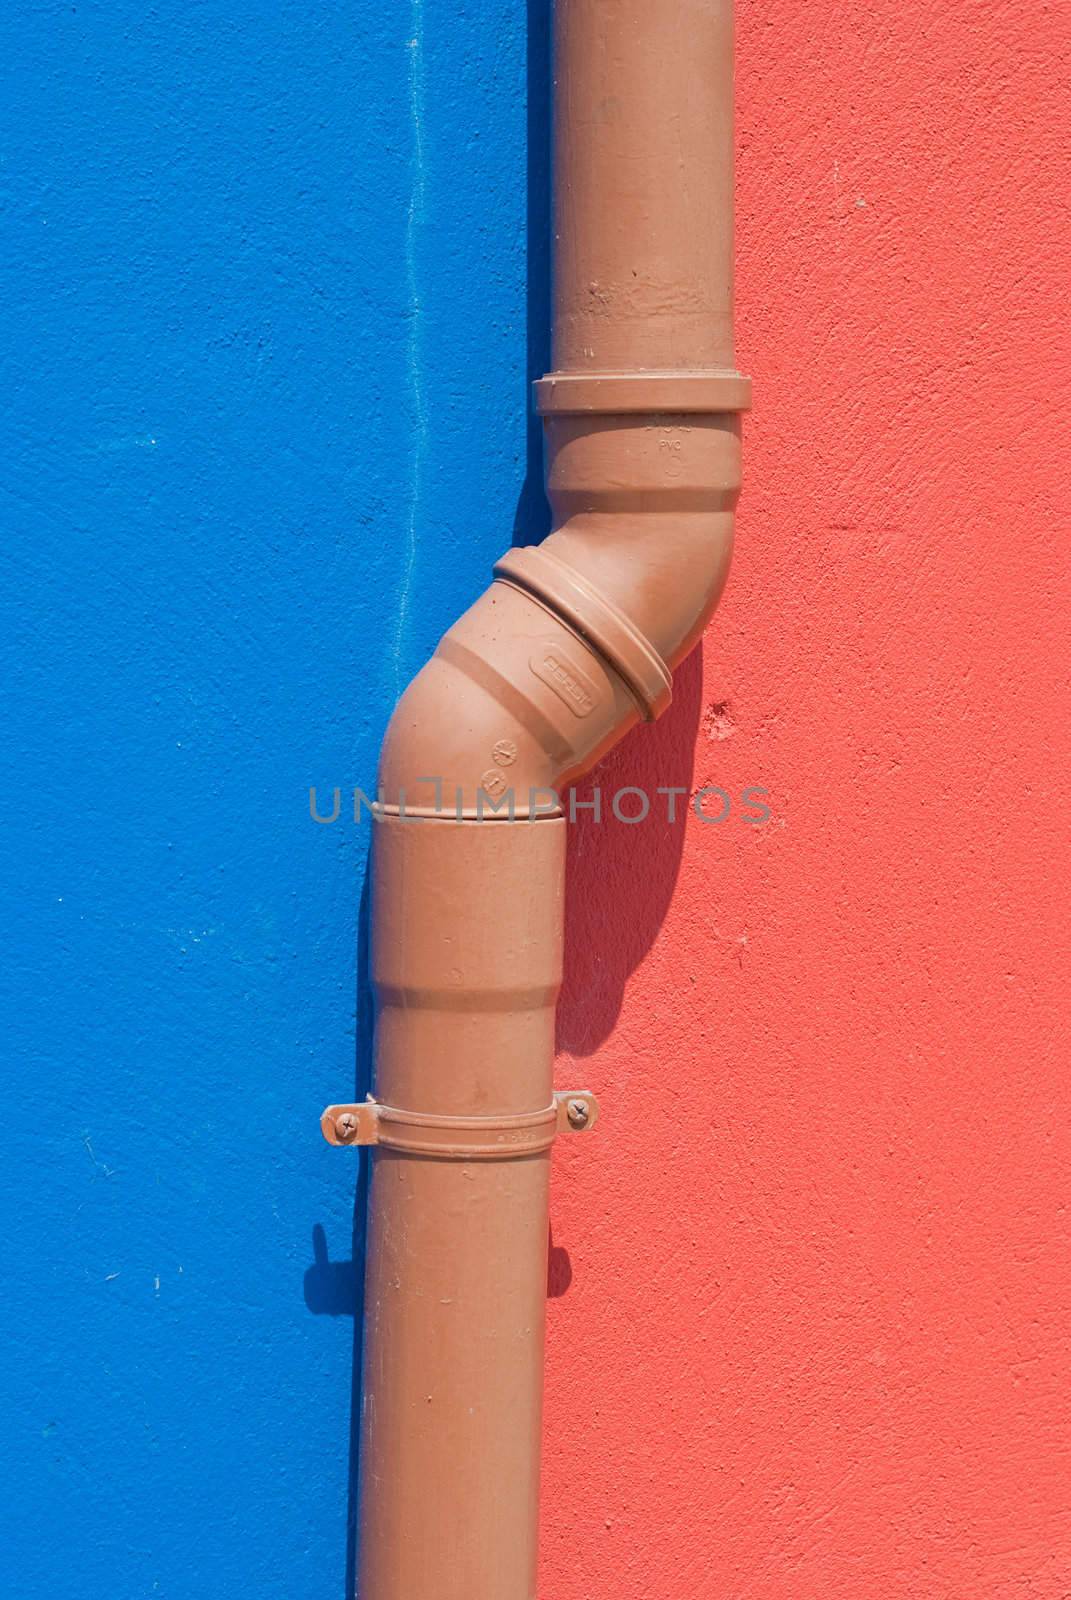 Plumbing pipe by homydesign